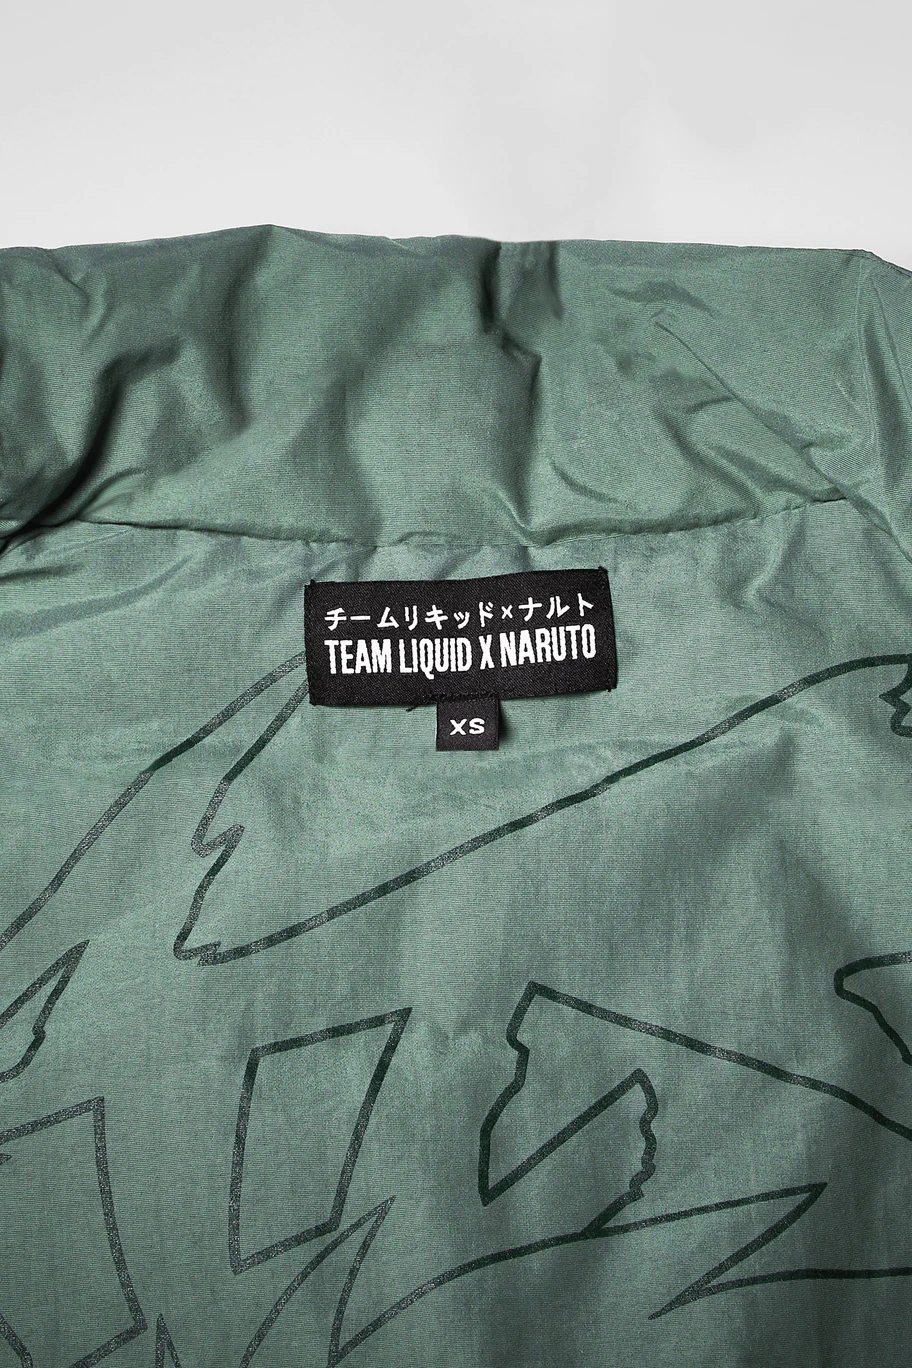 Naruto - Team Liquid x Naruto Kakashi Vest image count 17